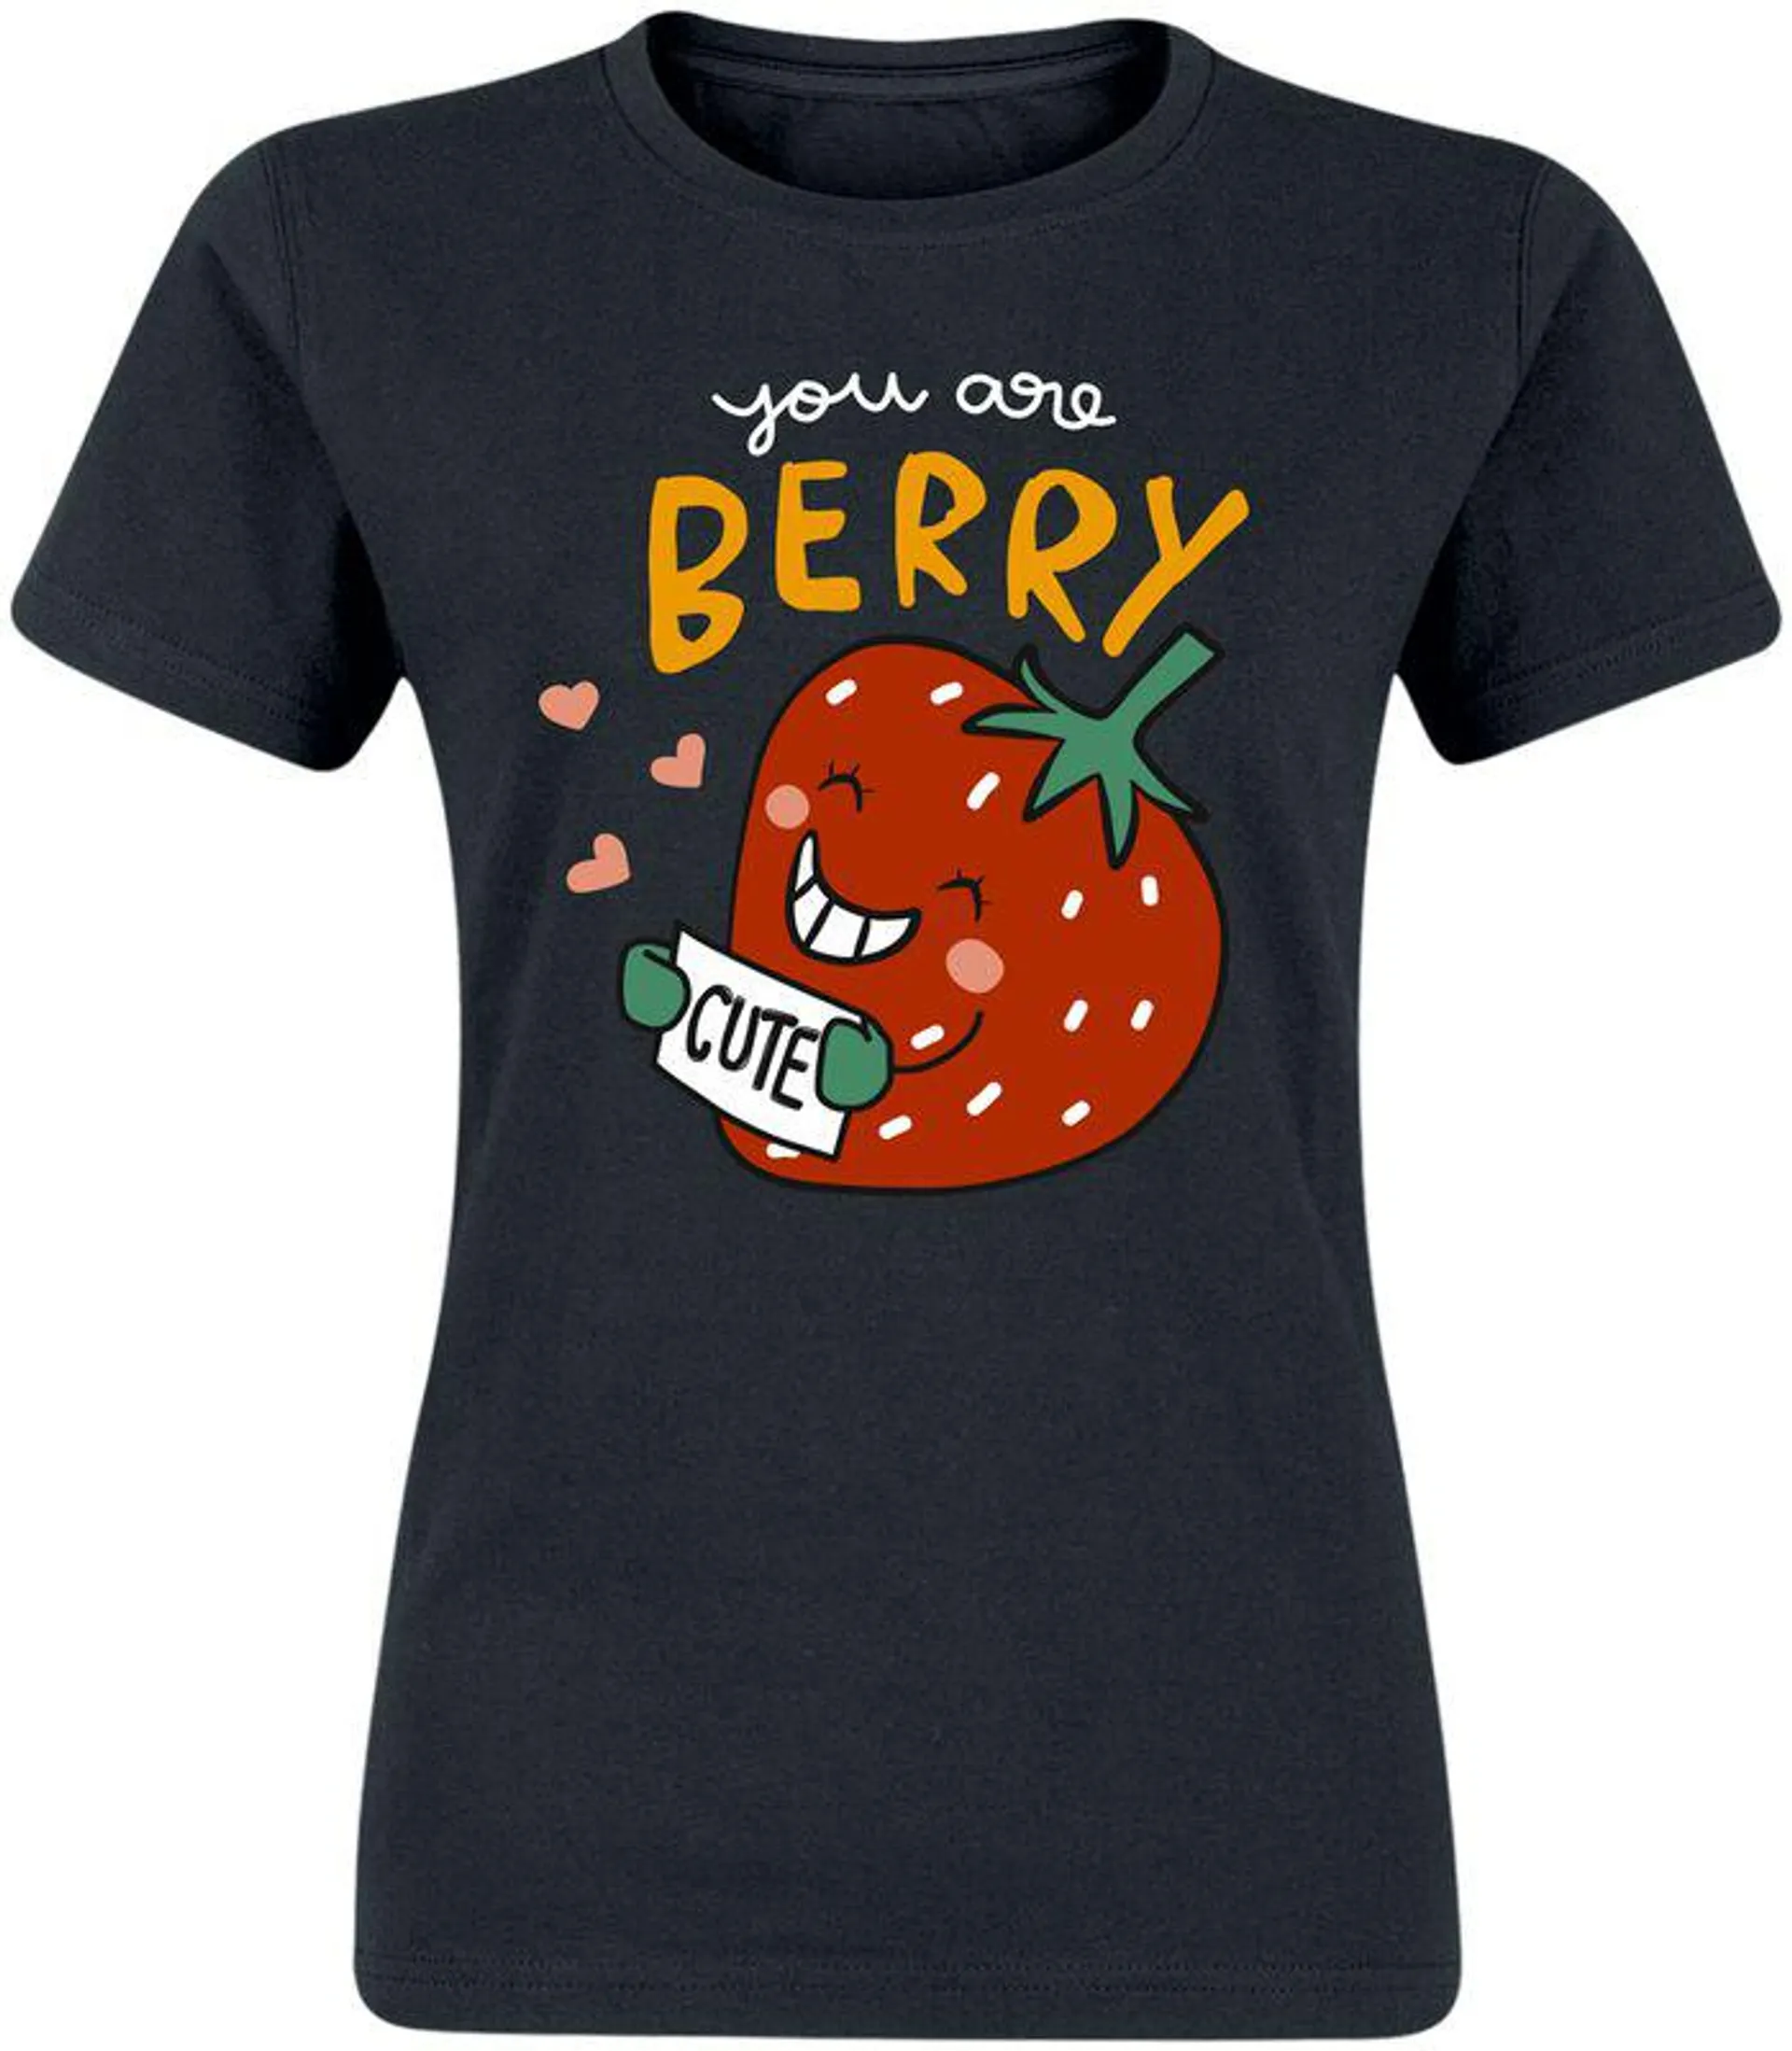 "You are berry cute" Camiseta Negro de Food